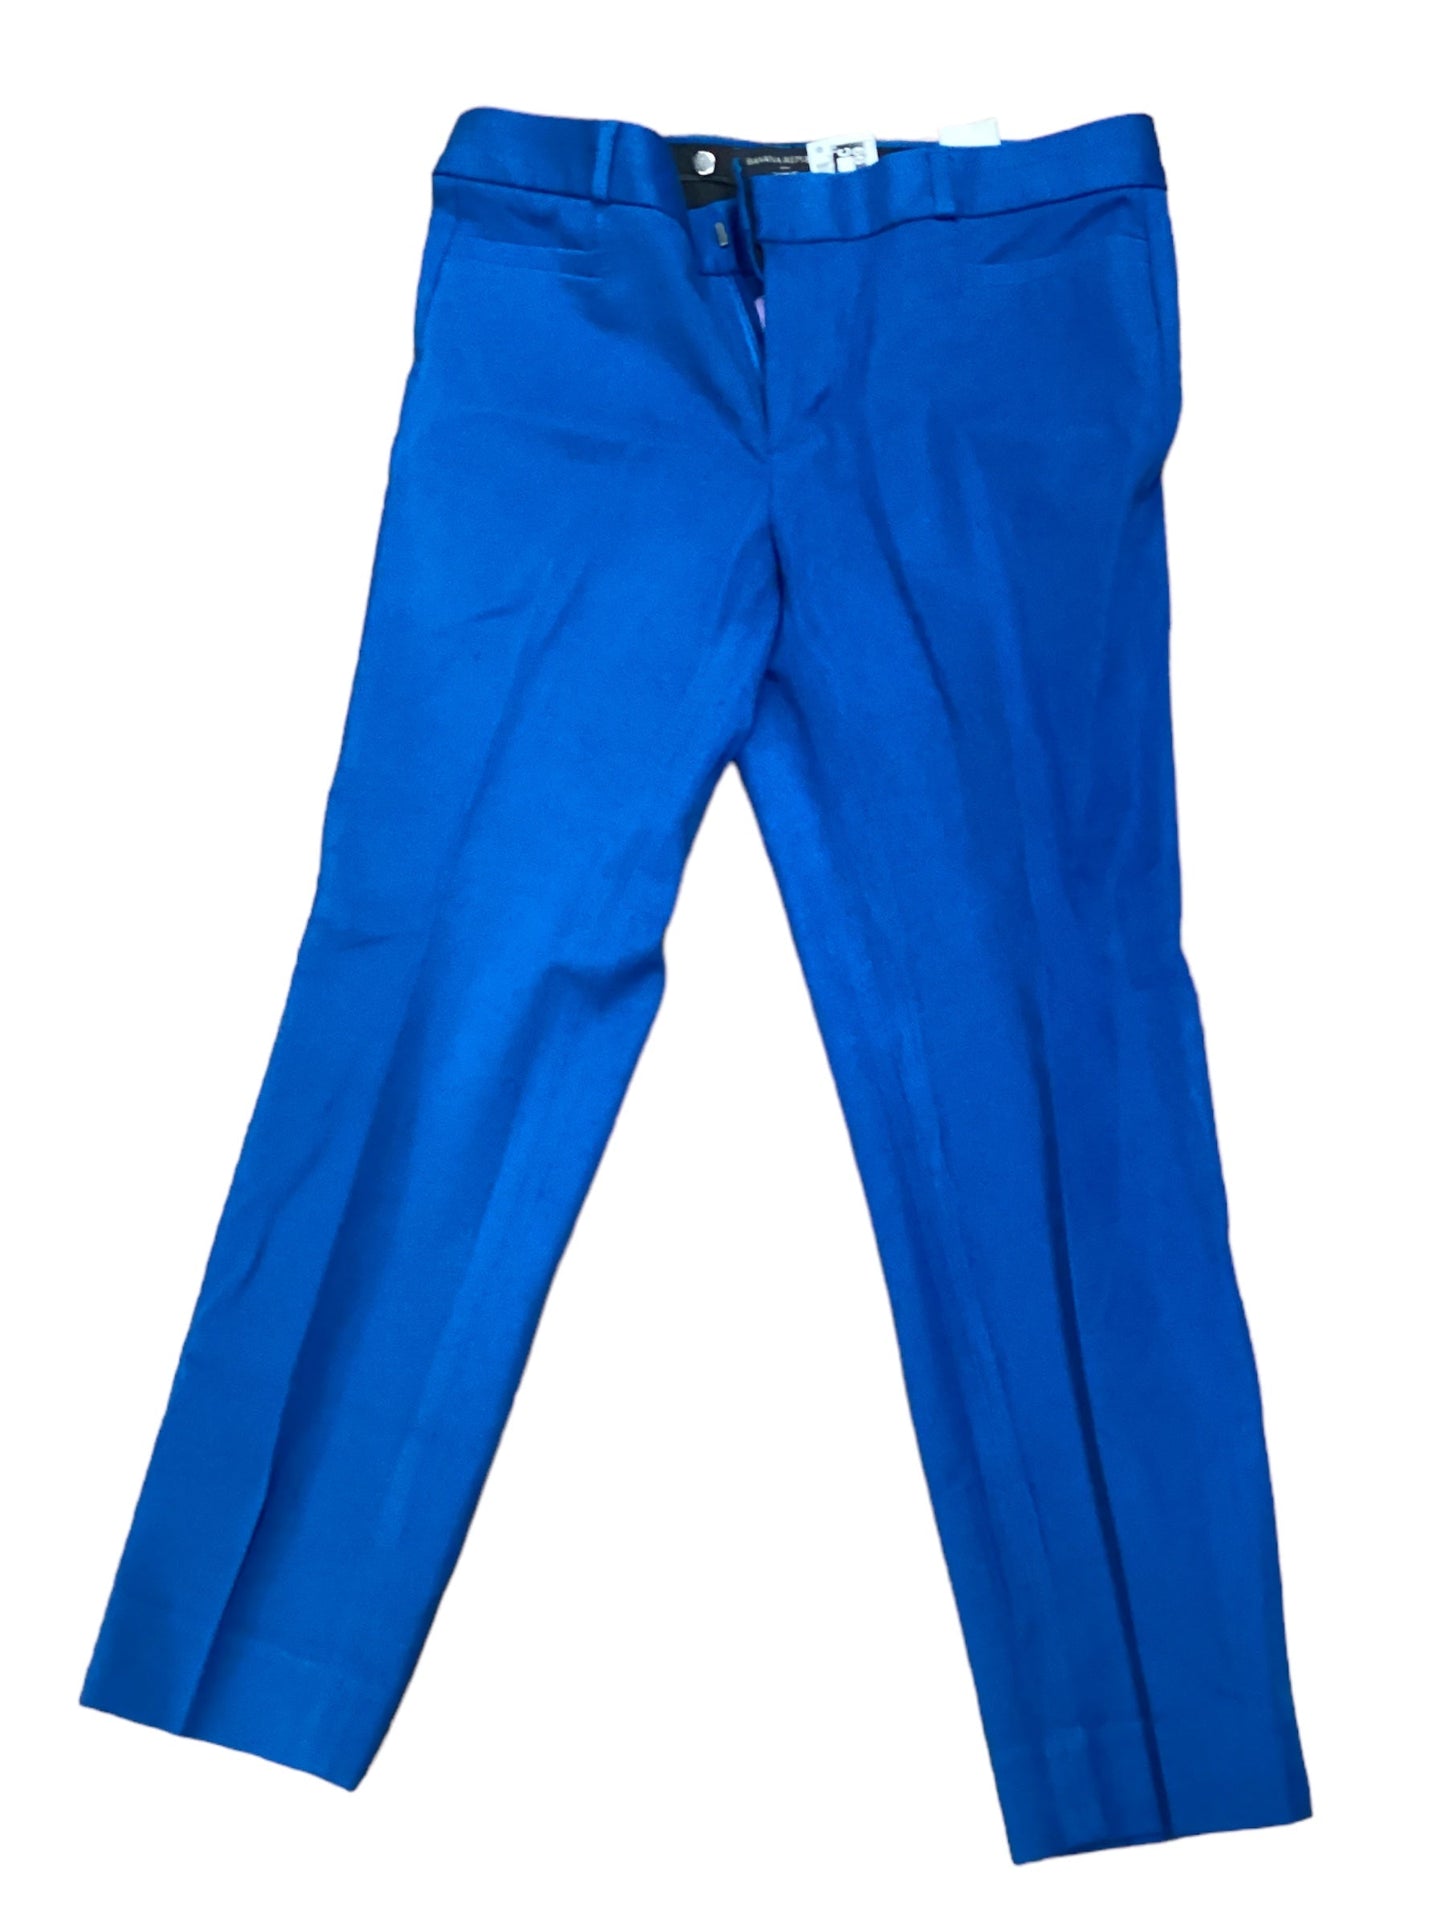 Pants Chinos & Khakis By Banana Republic  Size: 6